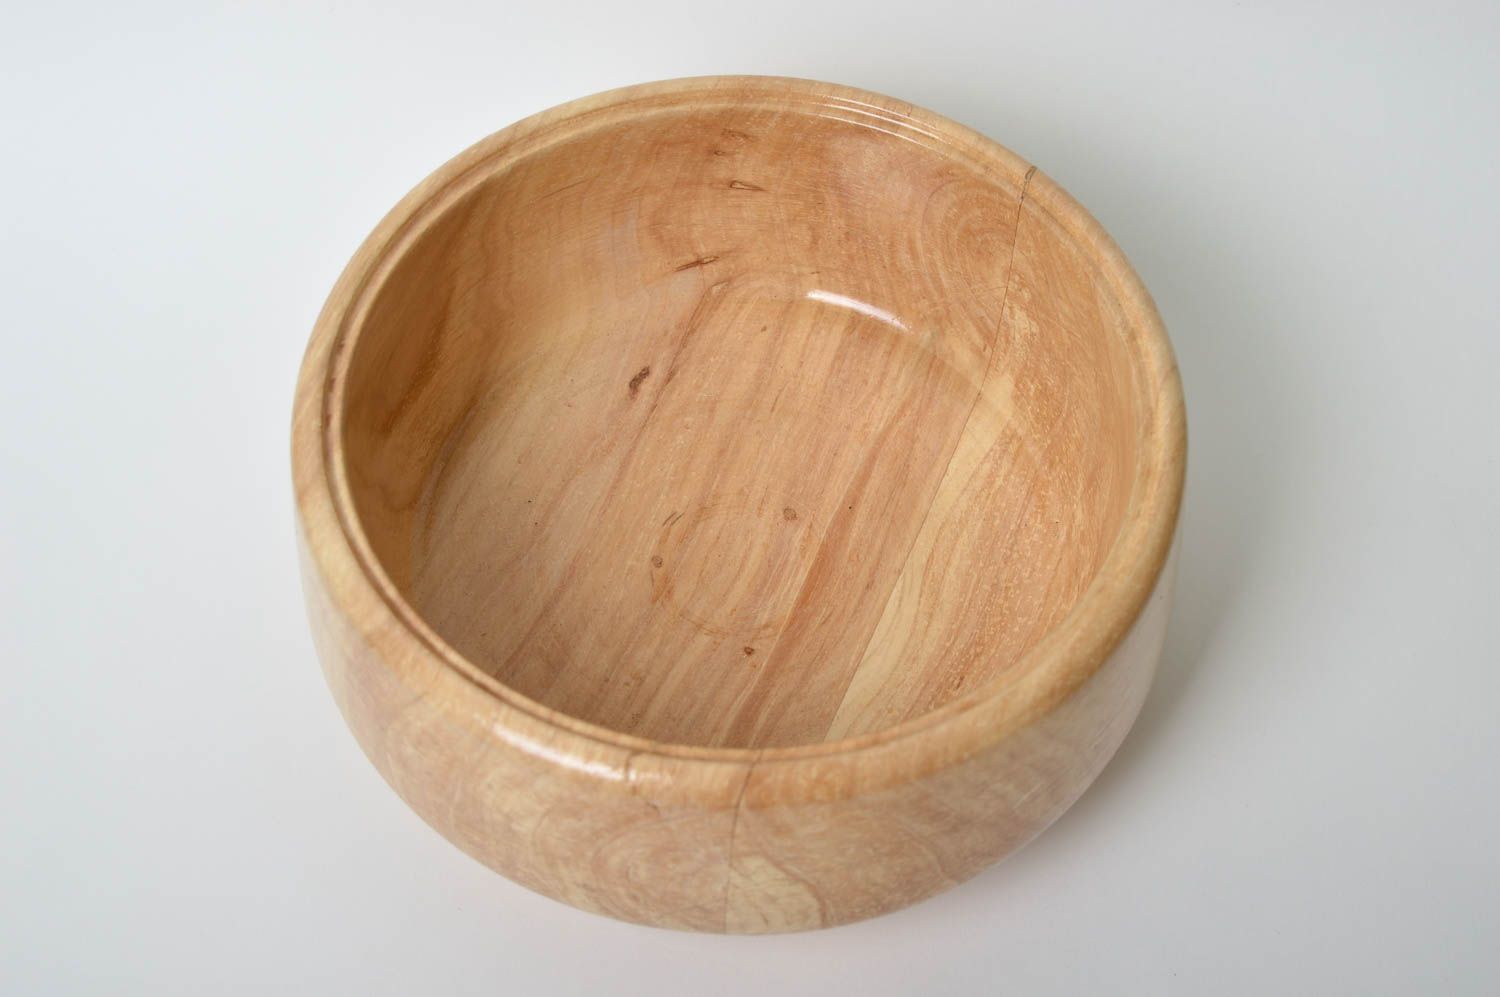 Handmade wooden bowl candy bowl design wood craft kitchen supplies ideas photo 3